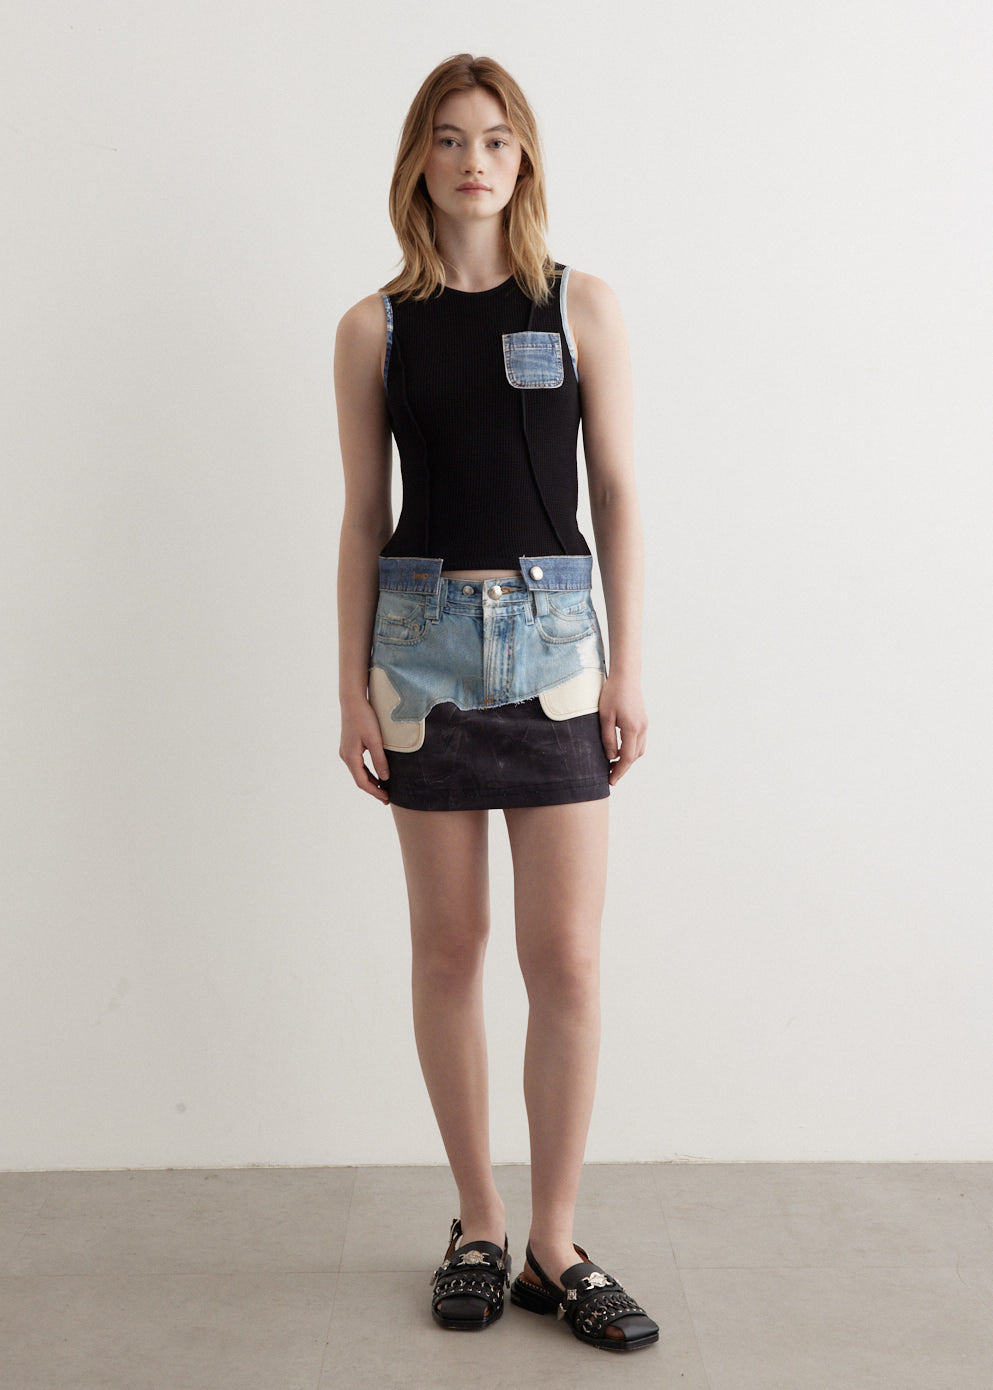 Faux-Denim Leather Printed Mini Skirt